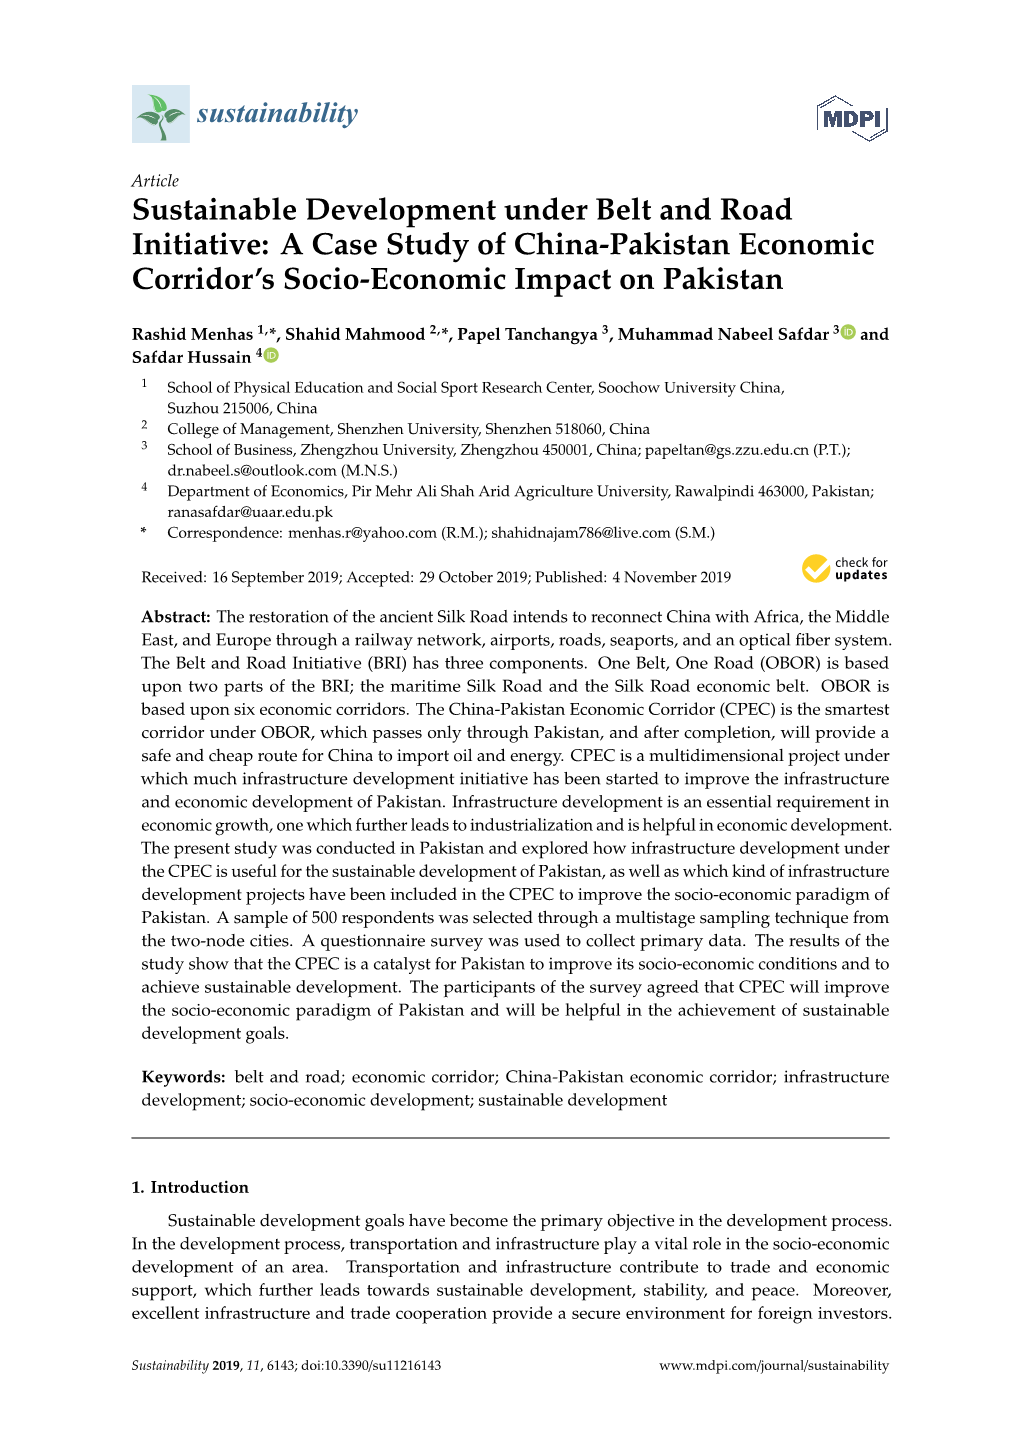 A Case Study of China-Pakistan Economic Corridor's Socio